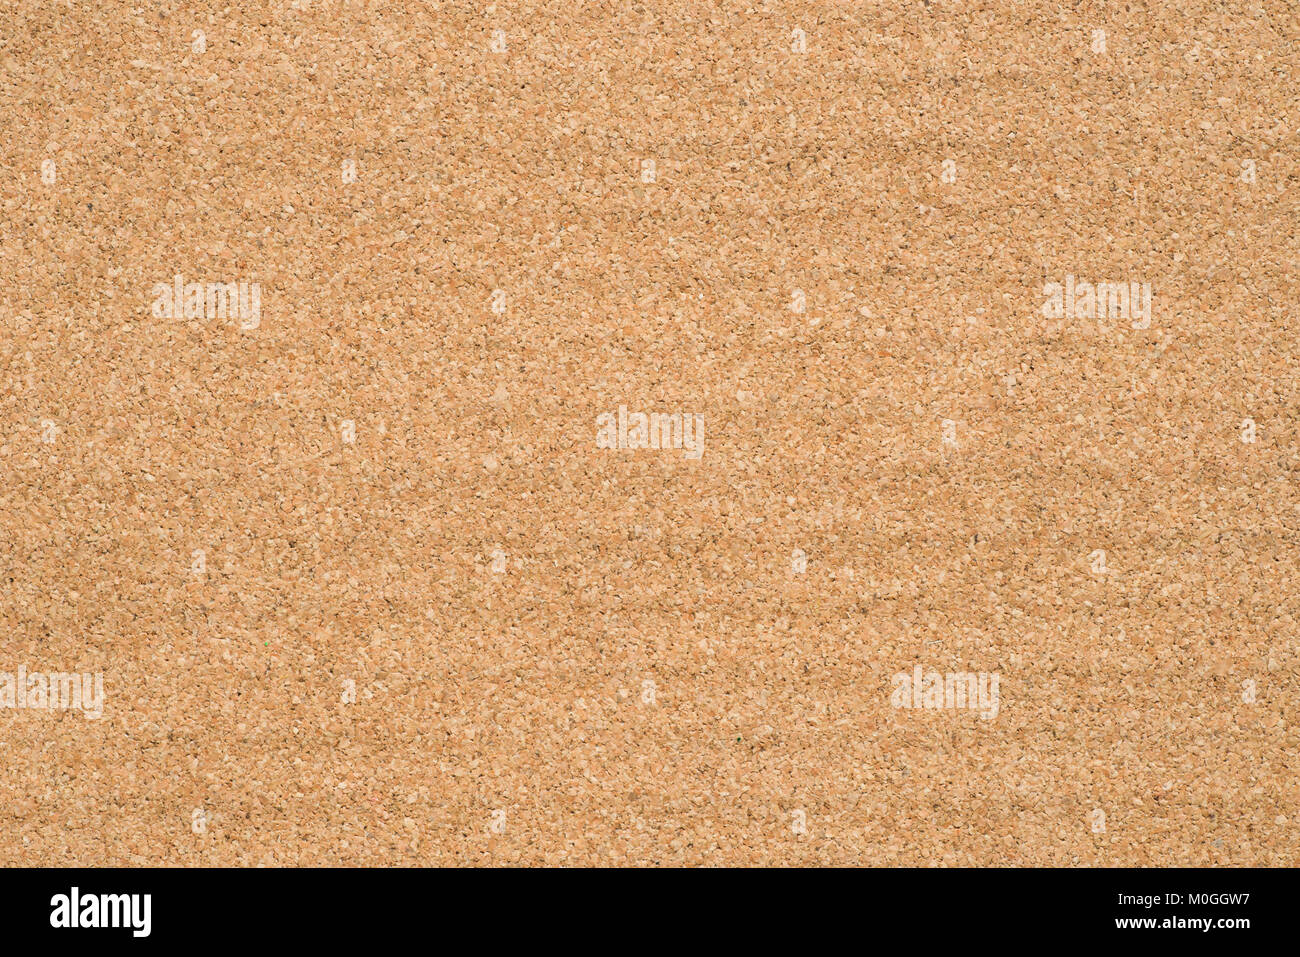 brown cork board texture background Stock Photo